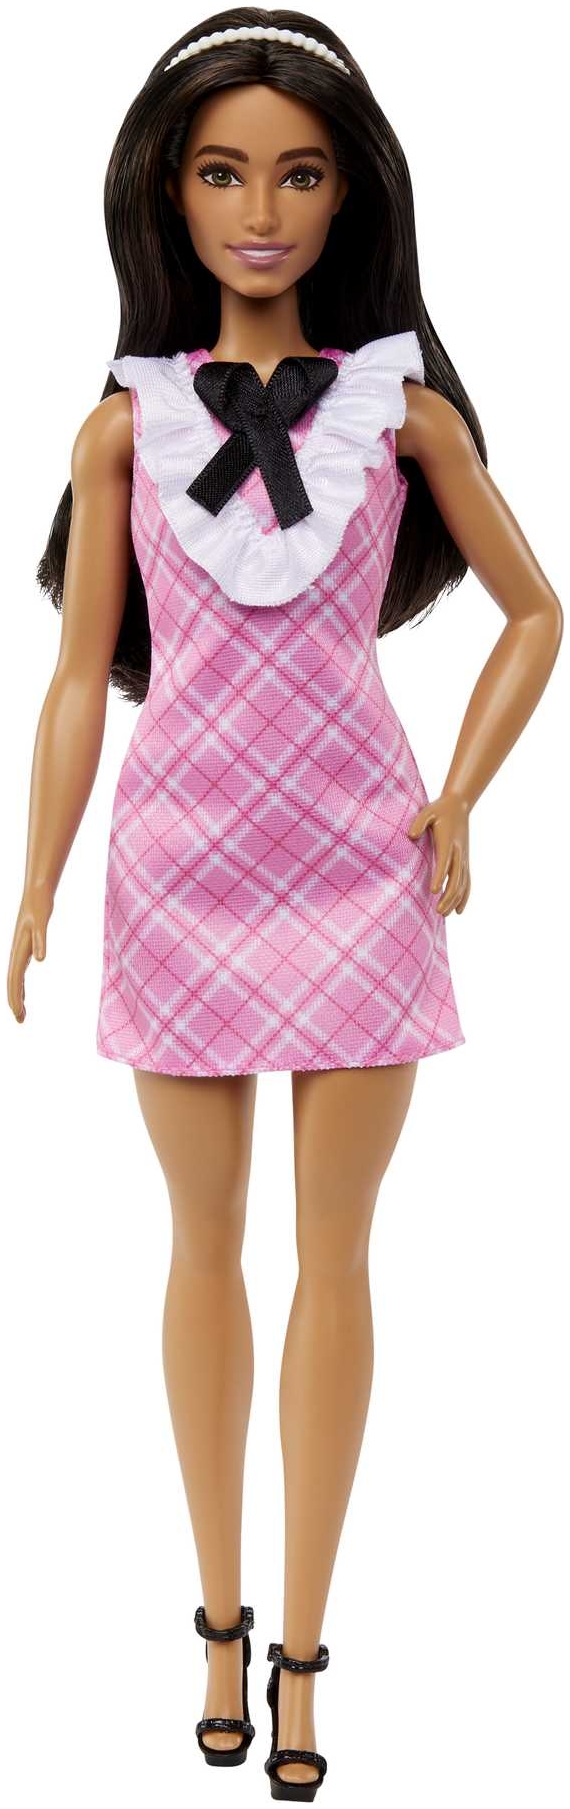 Barbie Fashionistas 2023 dolls - YouLoveIt.com